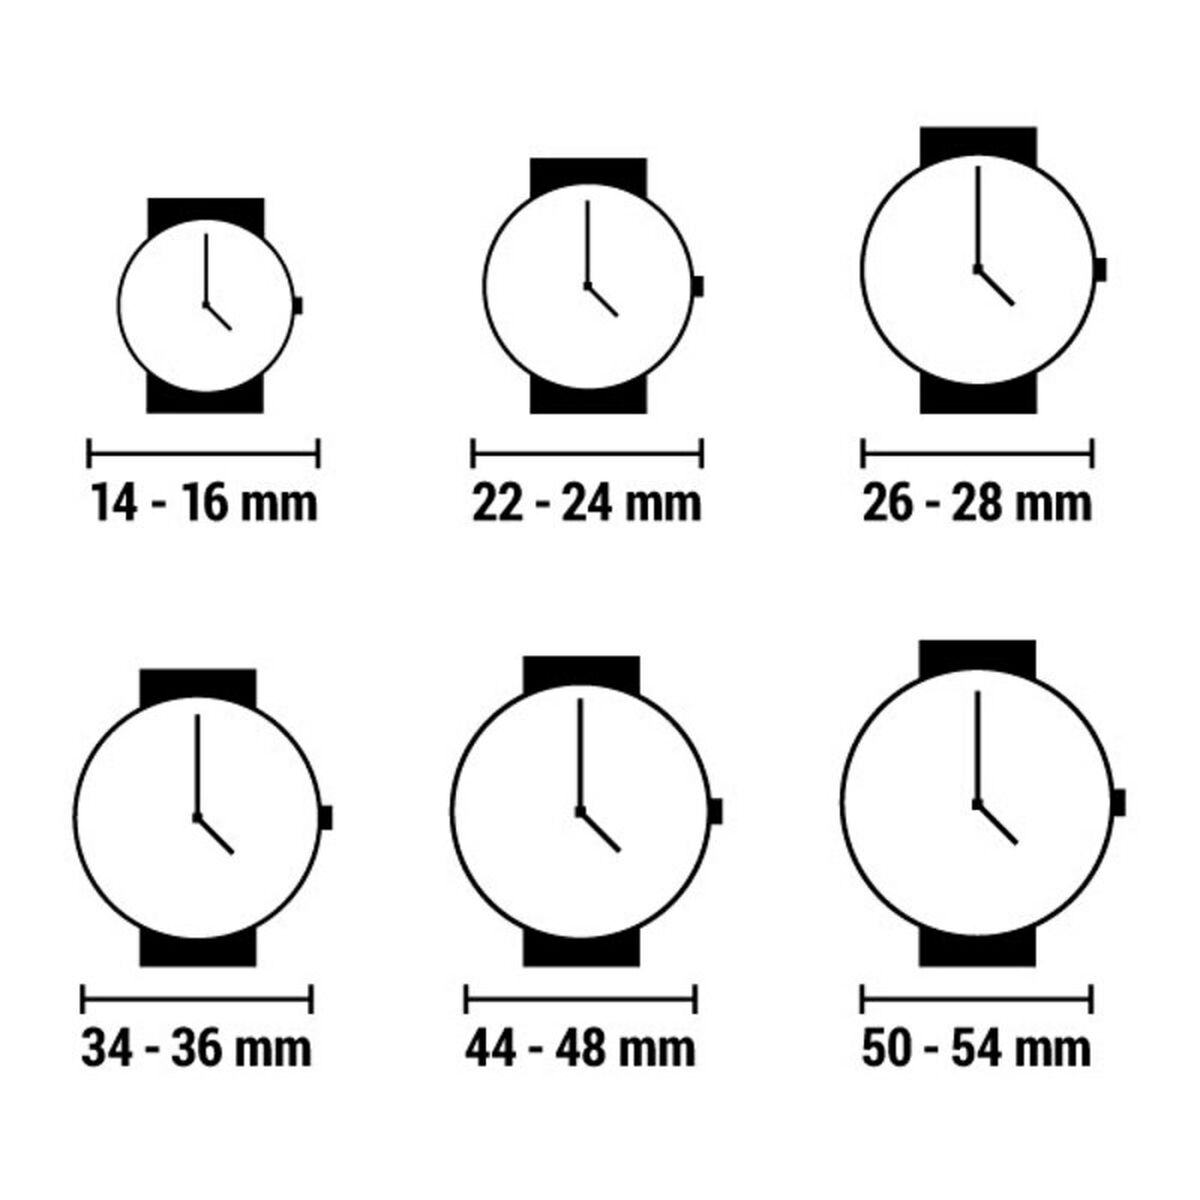 Horloge Dames Furla R4251110501 (Ø 34 mm)